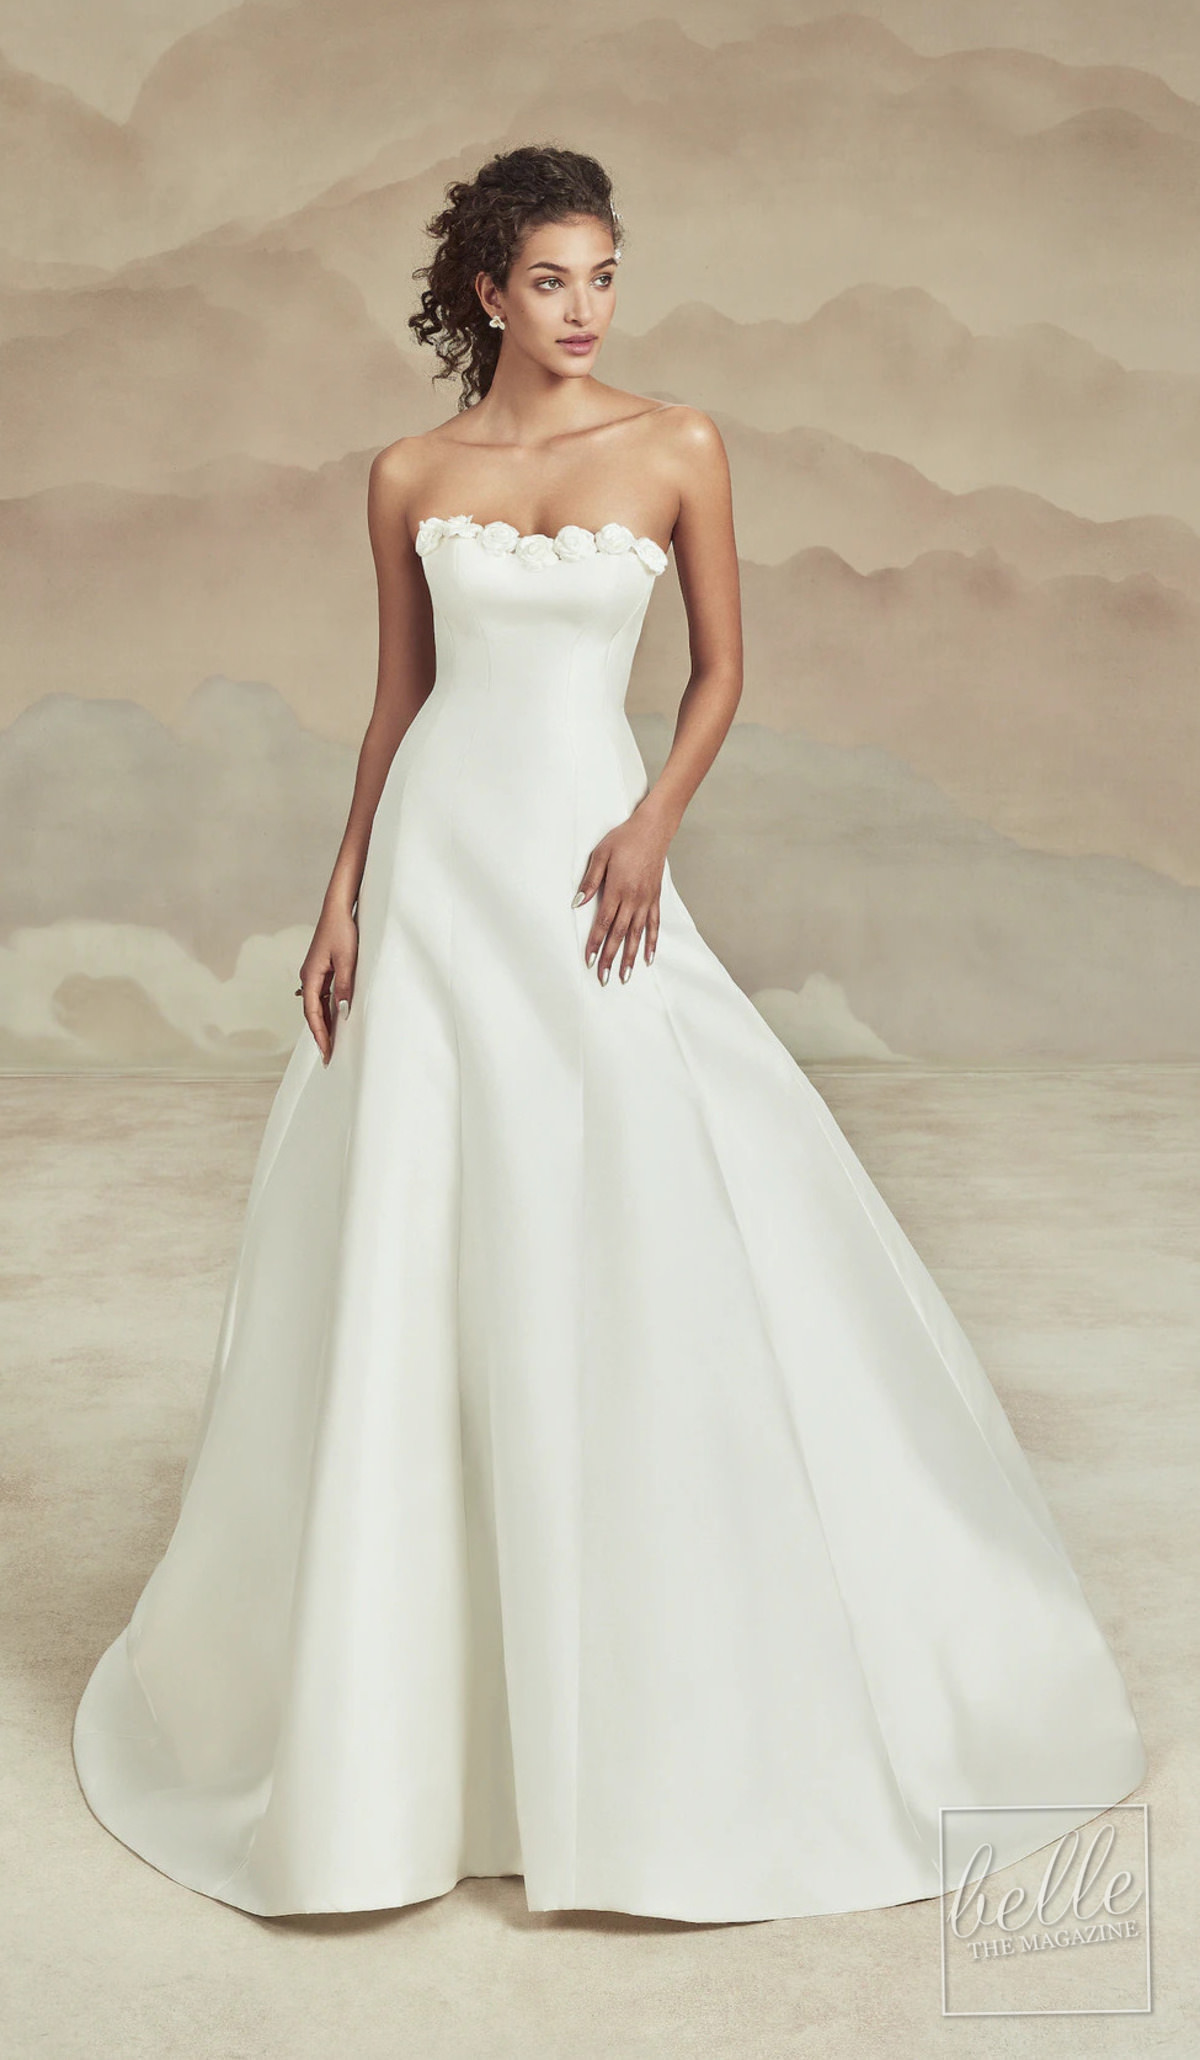 Wedding dress trends 2021 - Minimalist gown - INES DI SANTO ZIVA